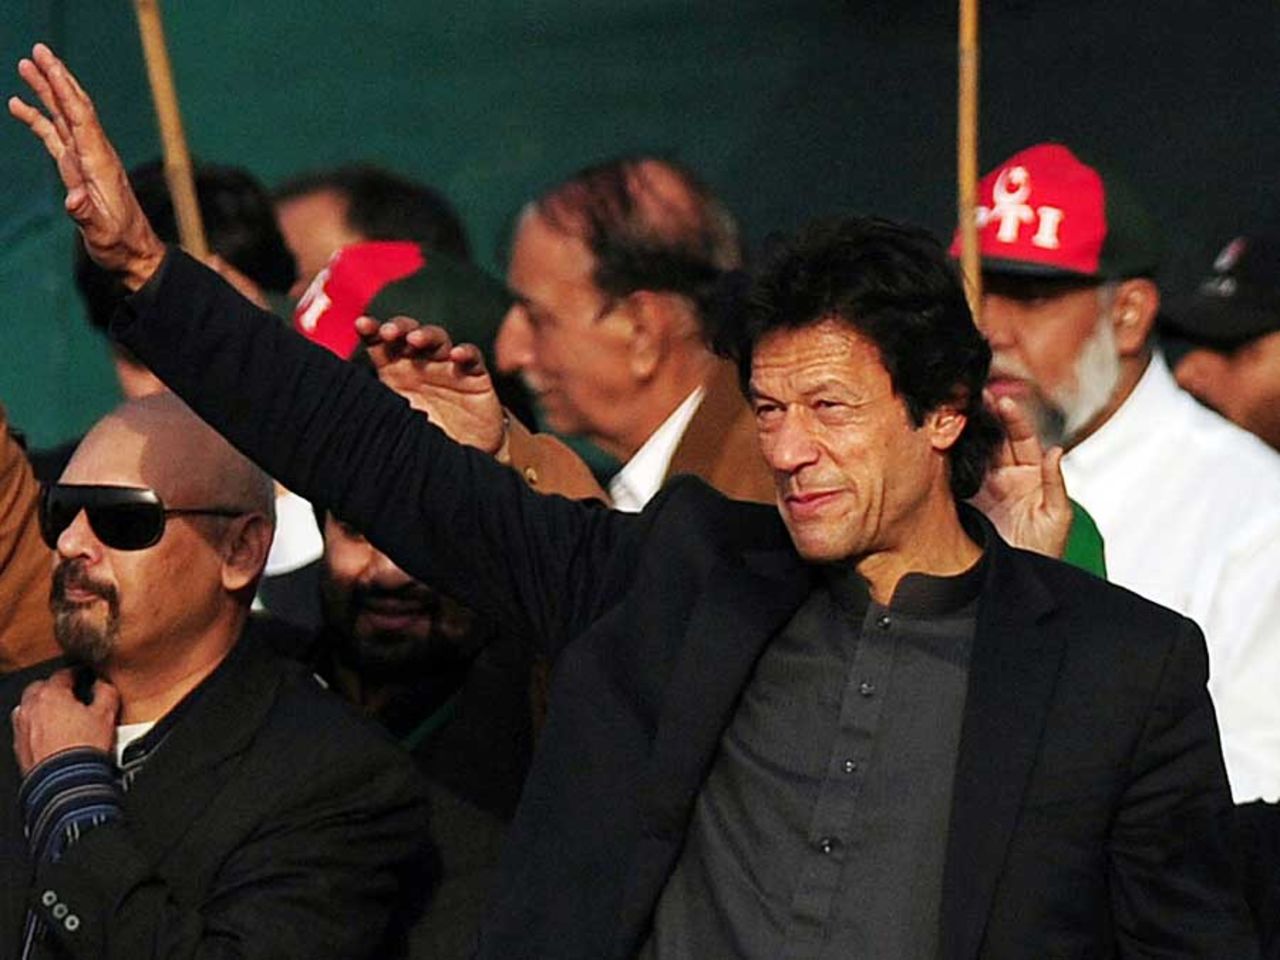 Imran Khan waves to the crowd at a political rally, Karachi, December 25, 2011